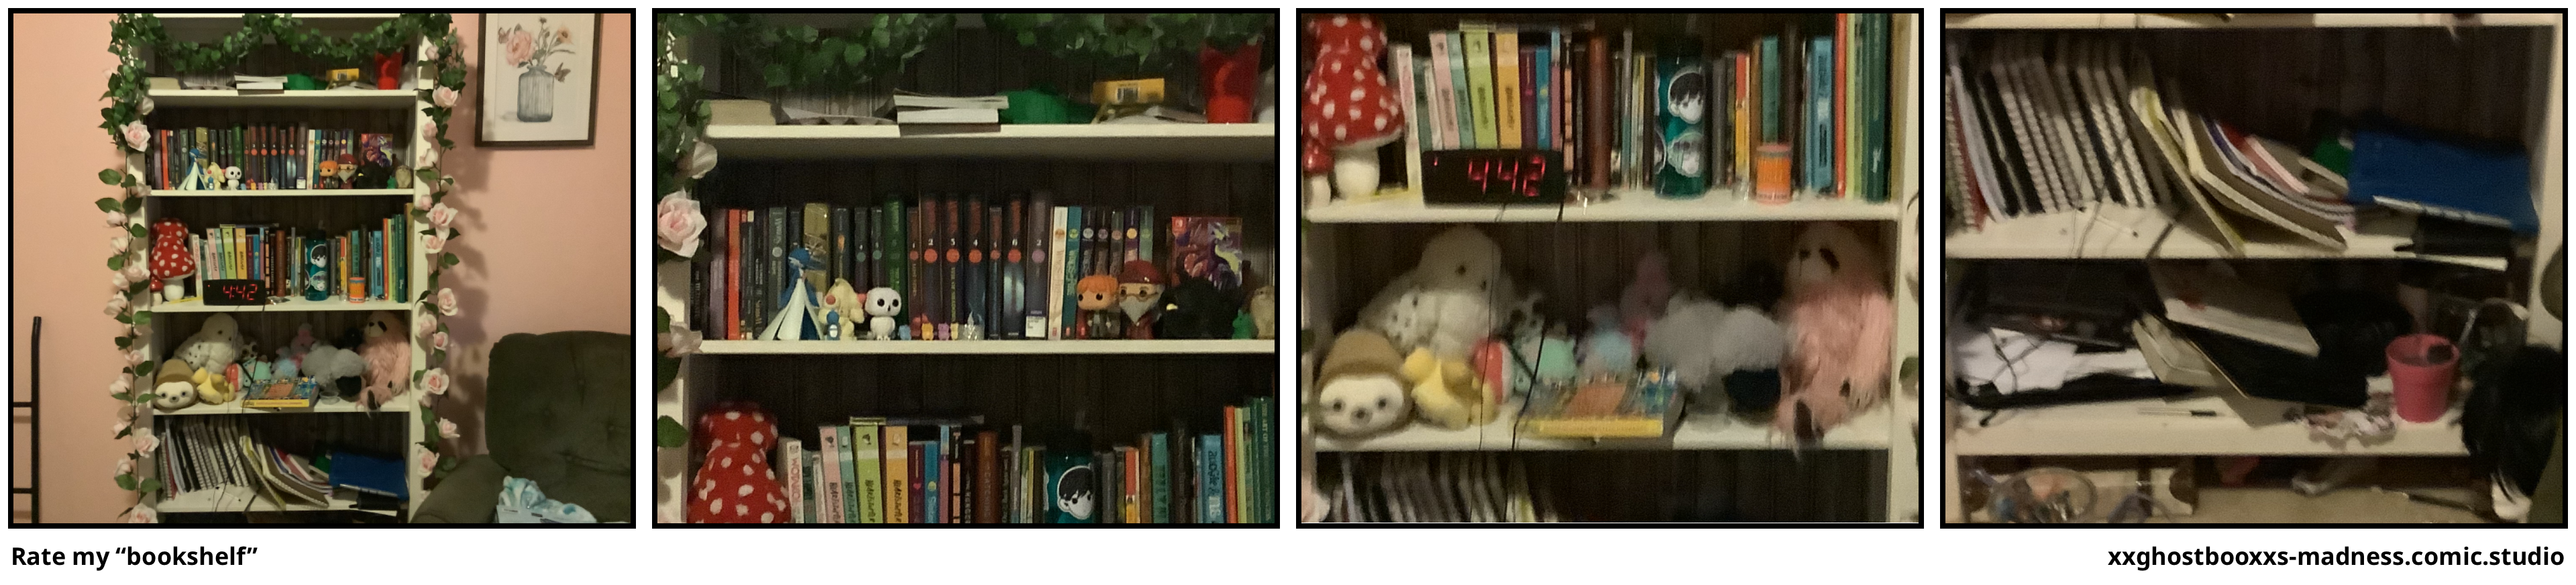 Rate my “bookshelf”